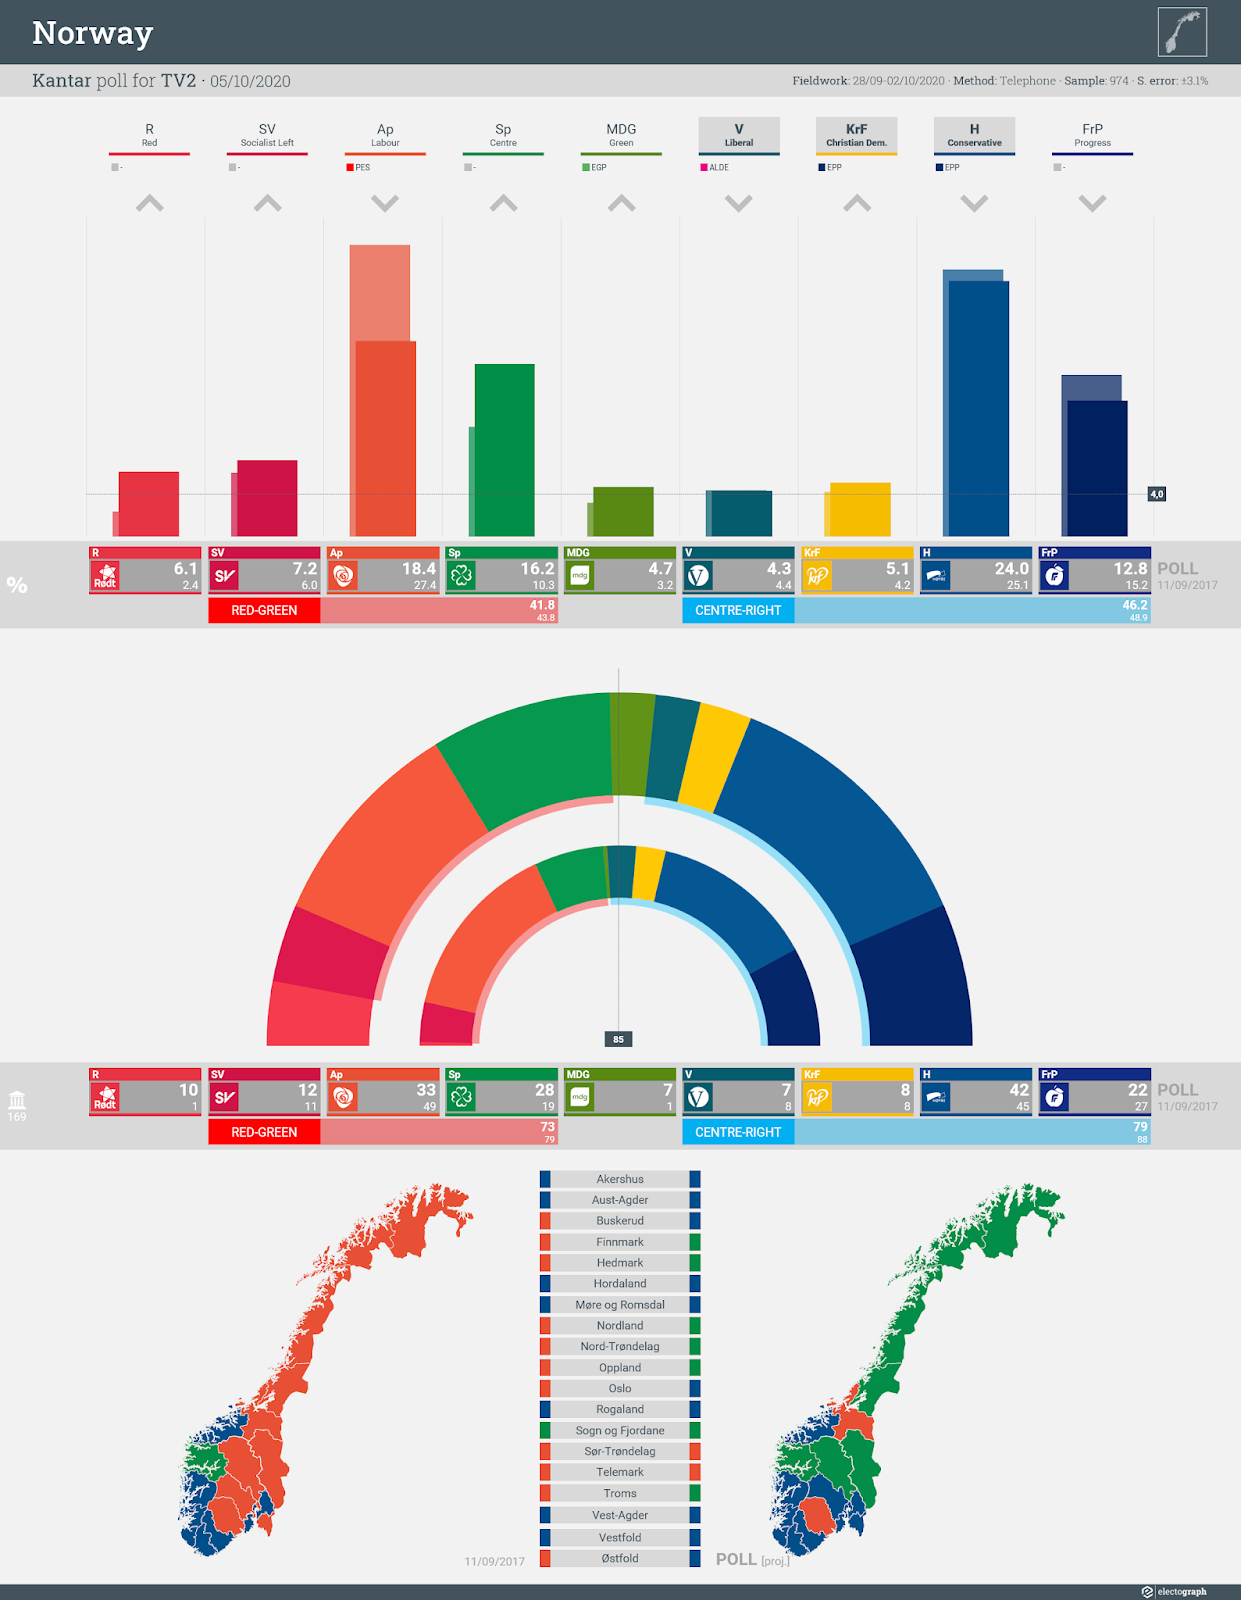 NORWAY: Kantar poll chart for TV2, 5 October 2020